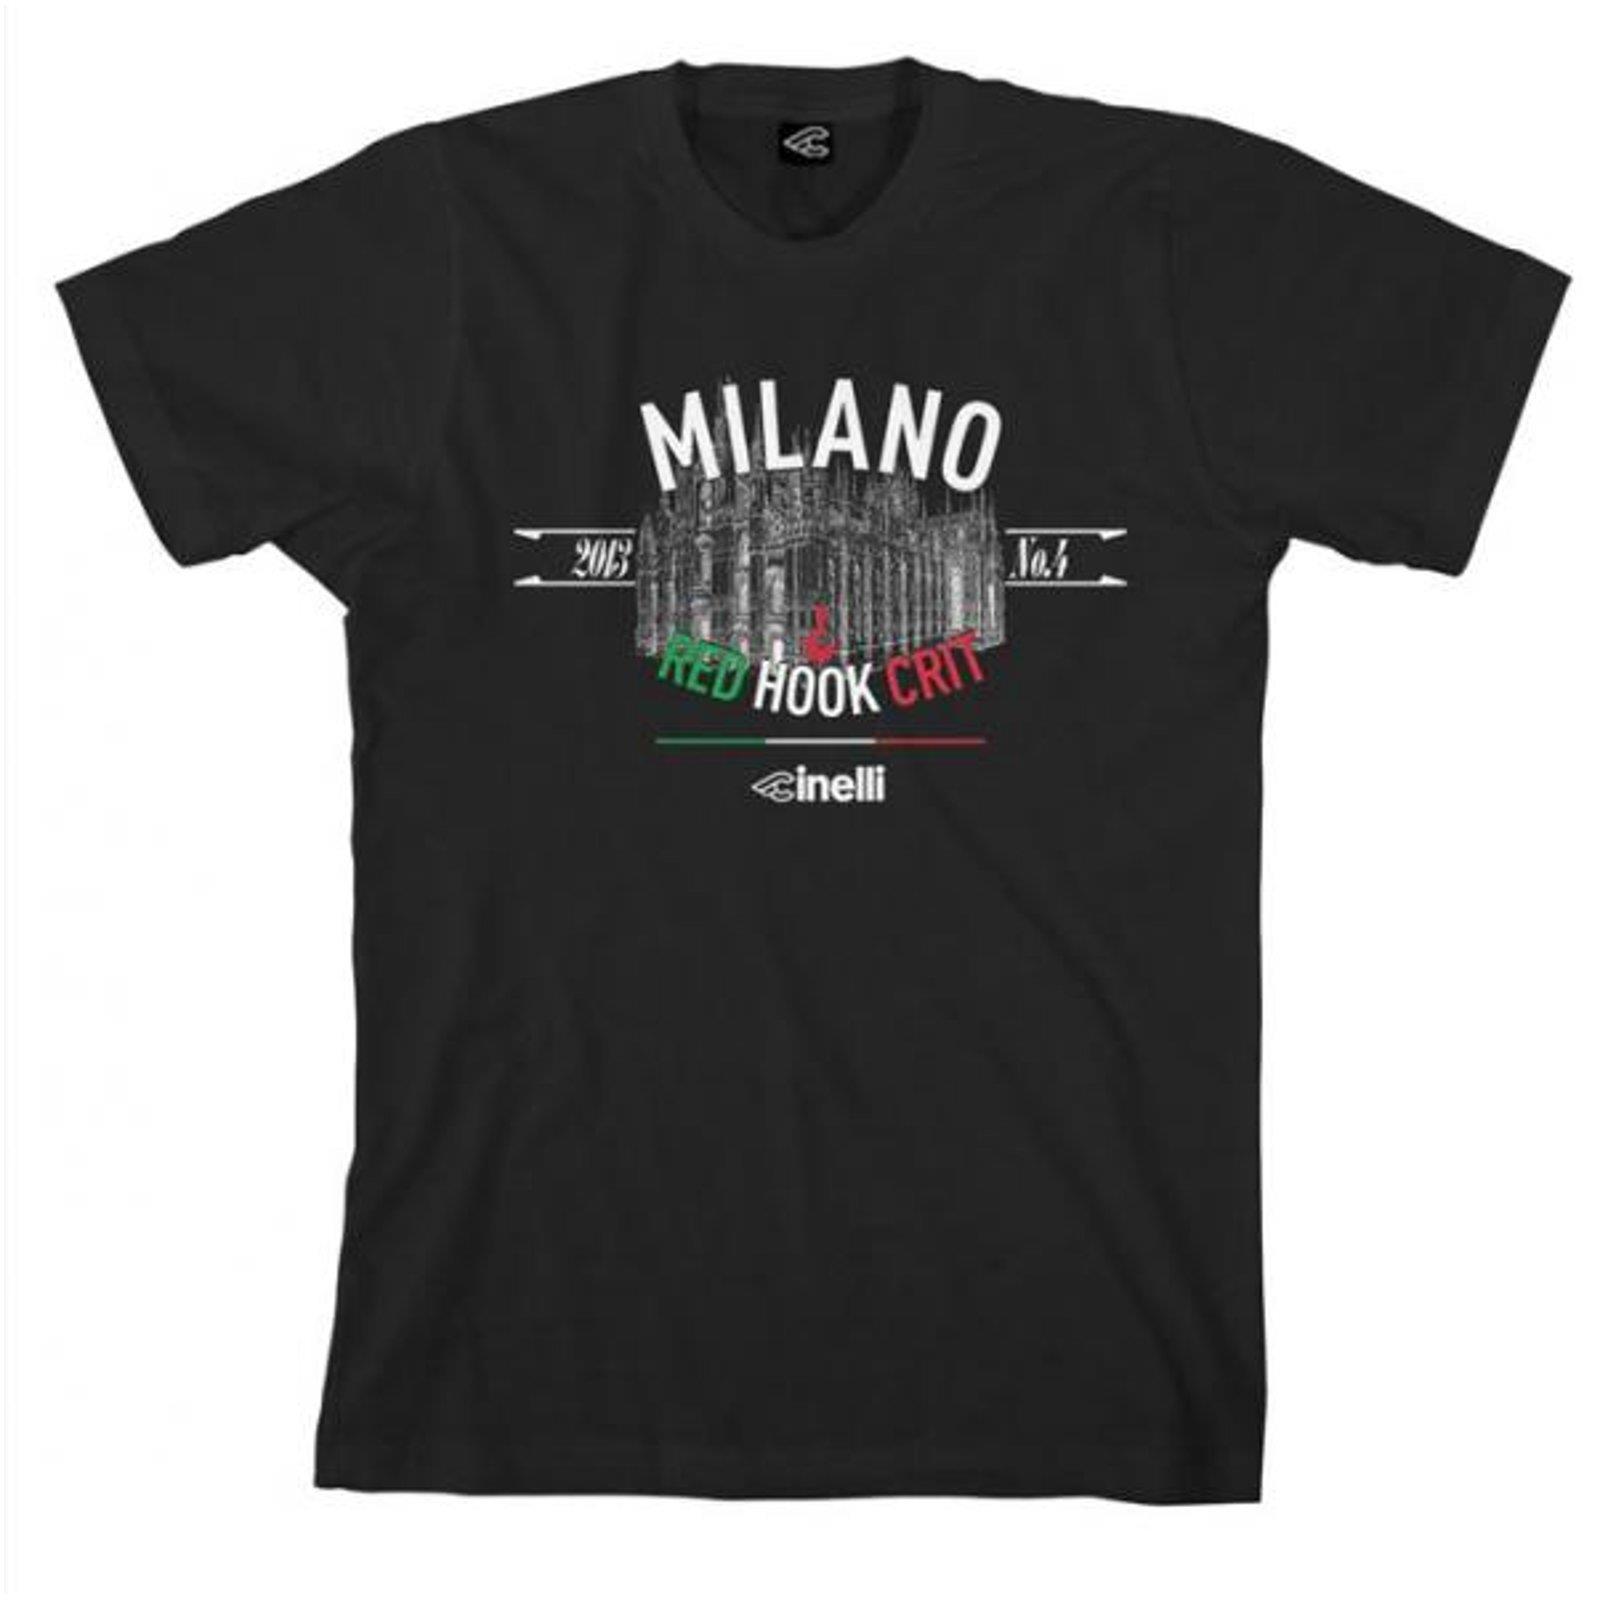 Cinelli T-shirt RHC MILANO NERO ORIGINALE Merchandise shirt Qualità Nuovo 